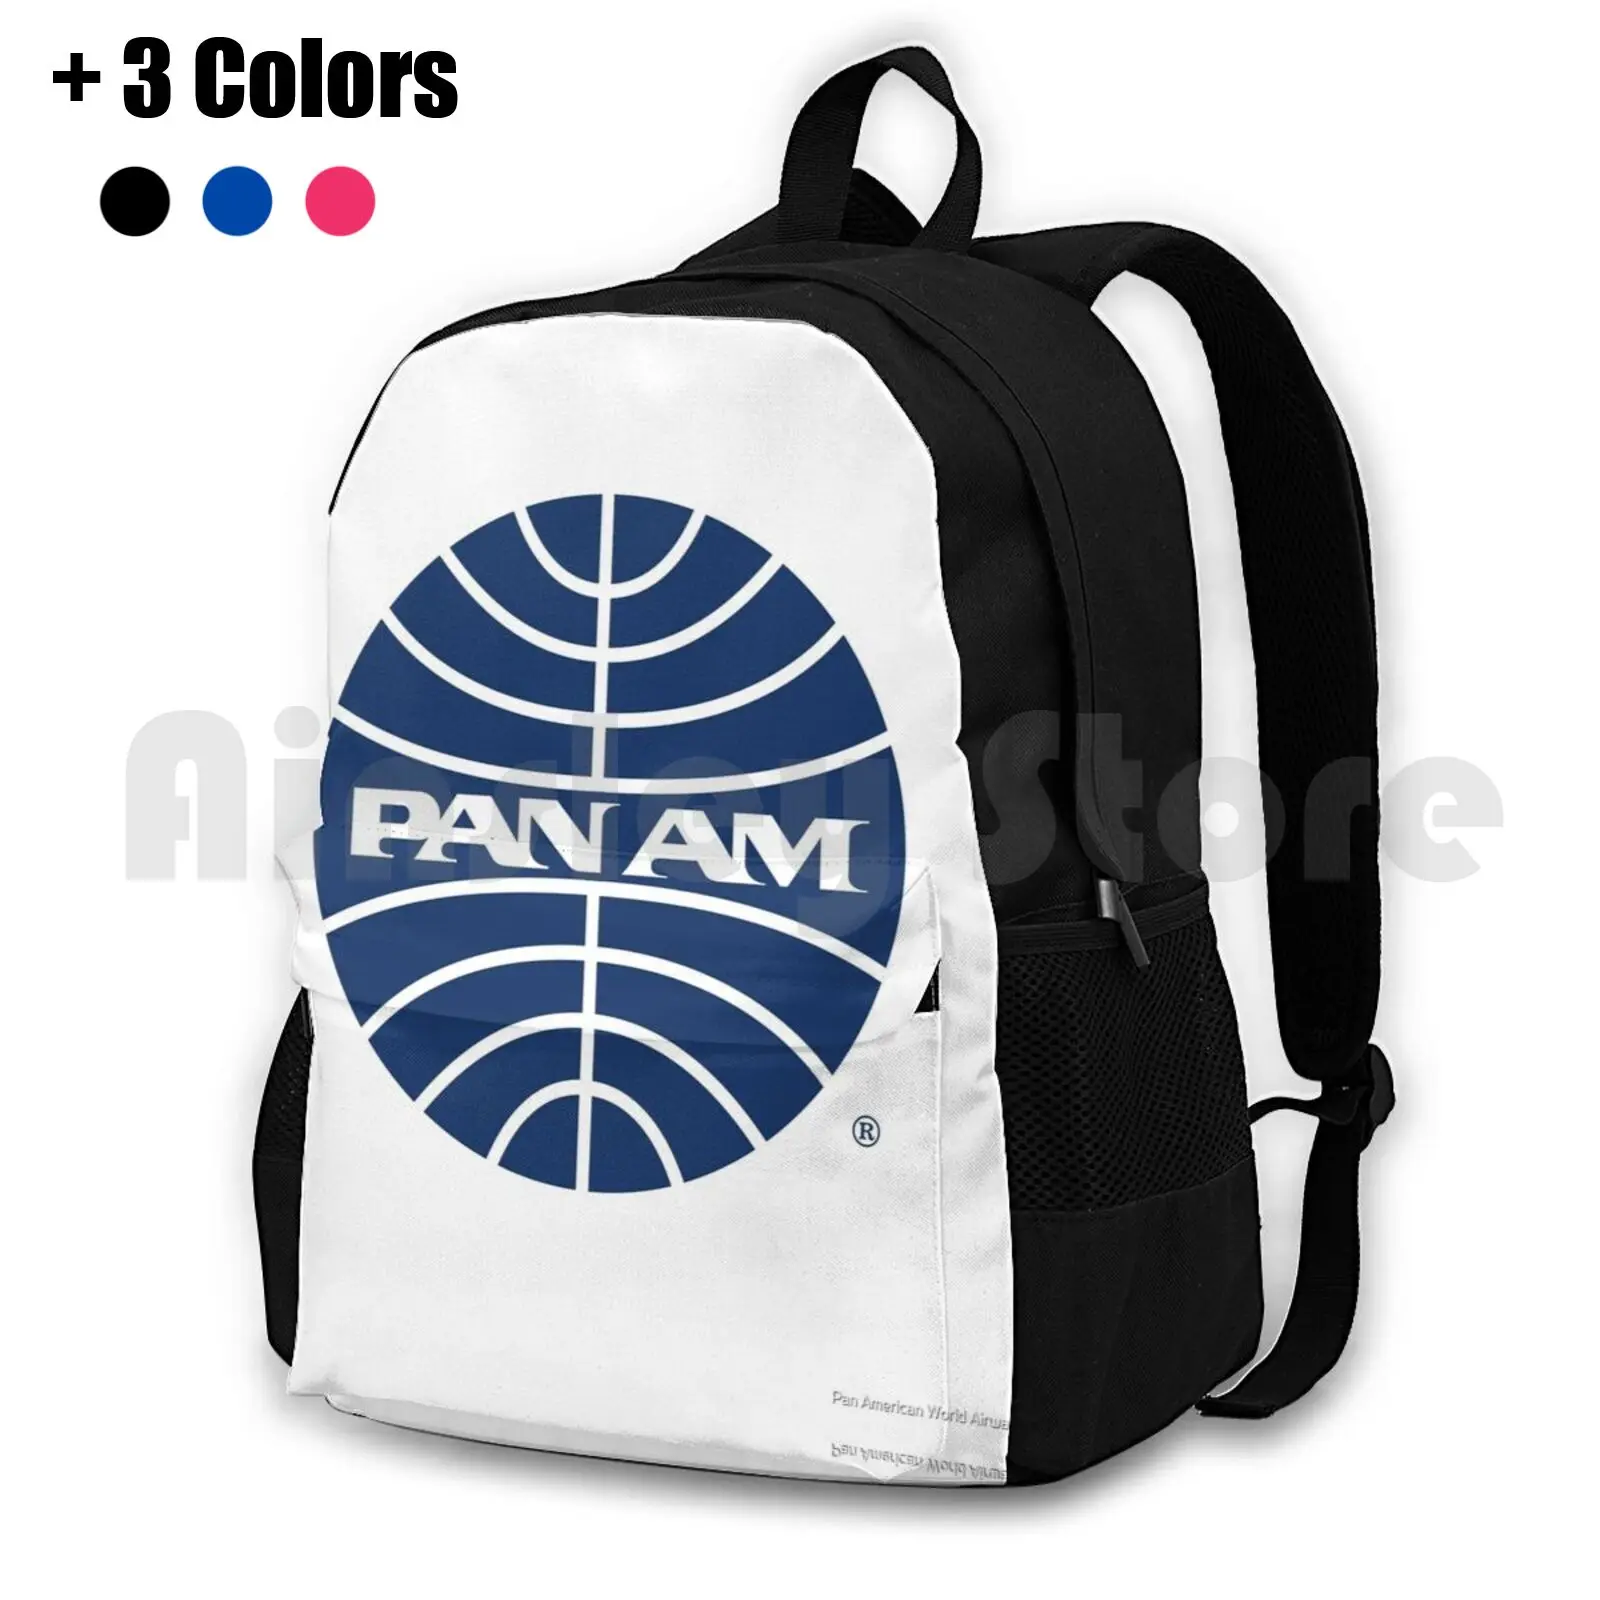 Pan Am Mid 1950S Globe Inverted Outdoor Hiking Backpack Waterproof Camping Travel Pan Am Panam Paa Pawamerch Pan American World